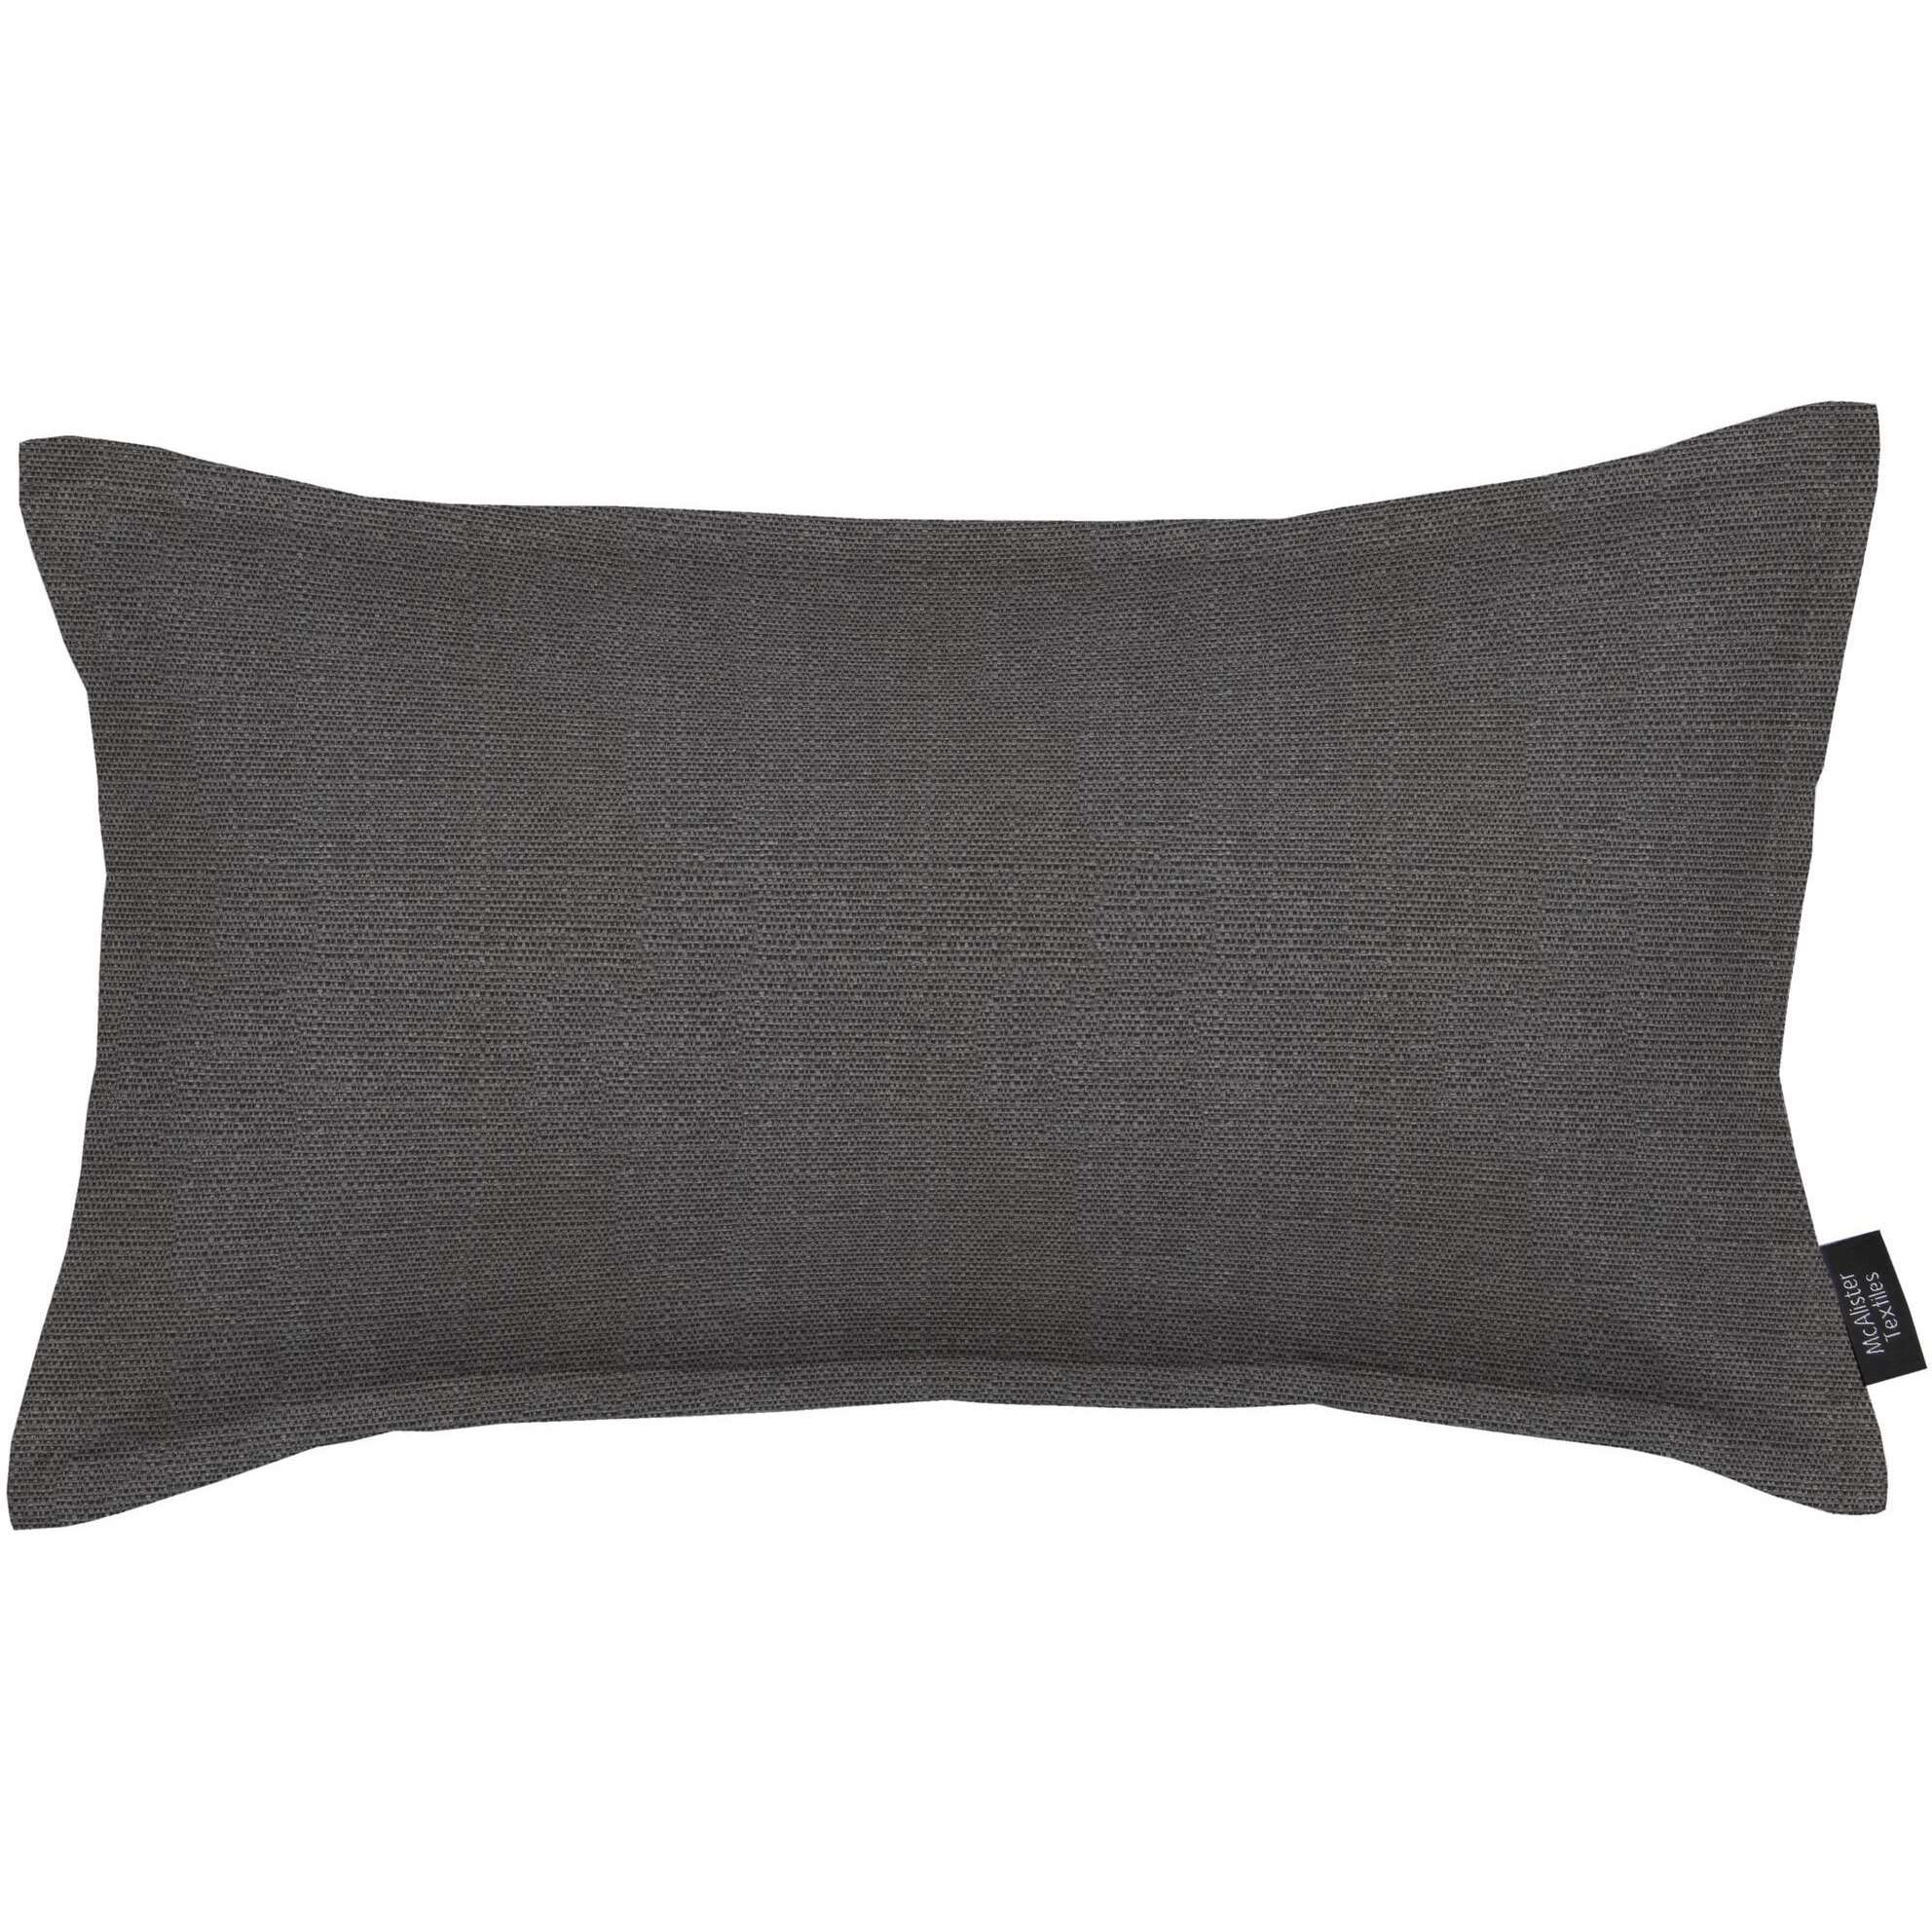 McAlister Textiles Savannah Charcoal Grey Pillow Pillow Cover Only 50cm x 30cm 